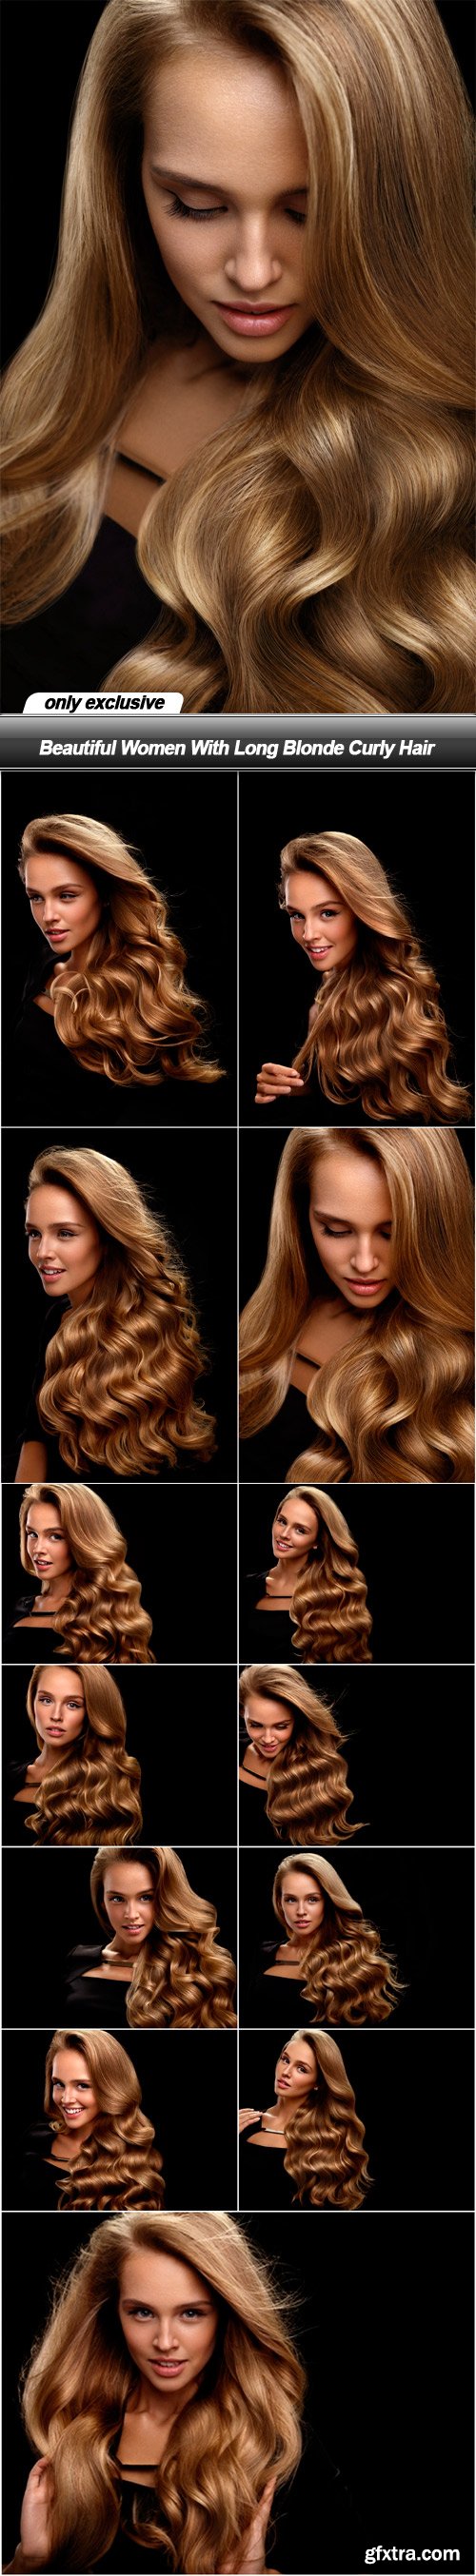 Beautiful Women With Long Blonde Curly Hair - 13 UHQ JPEG